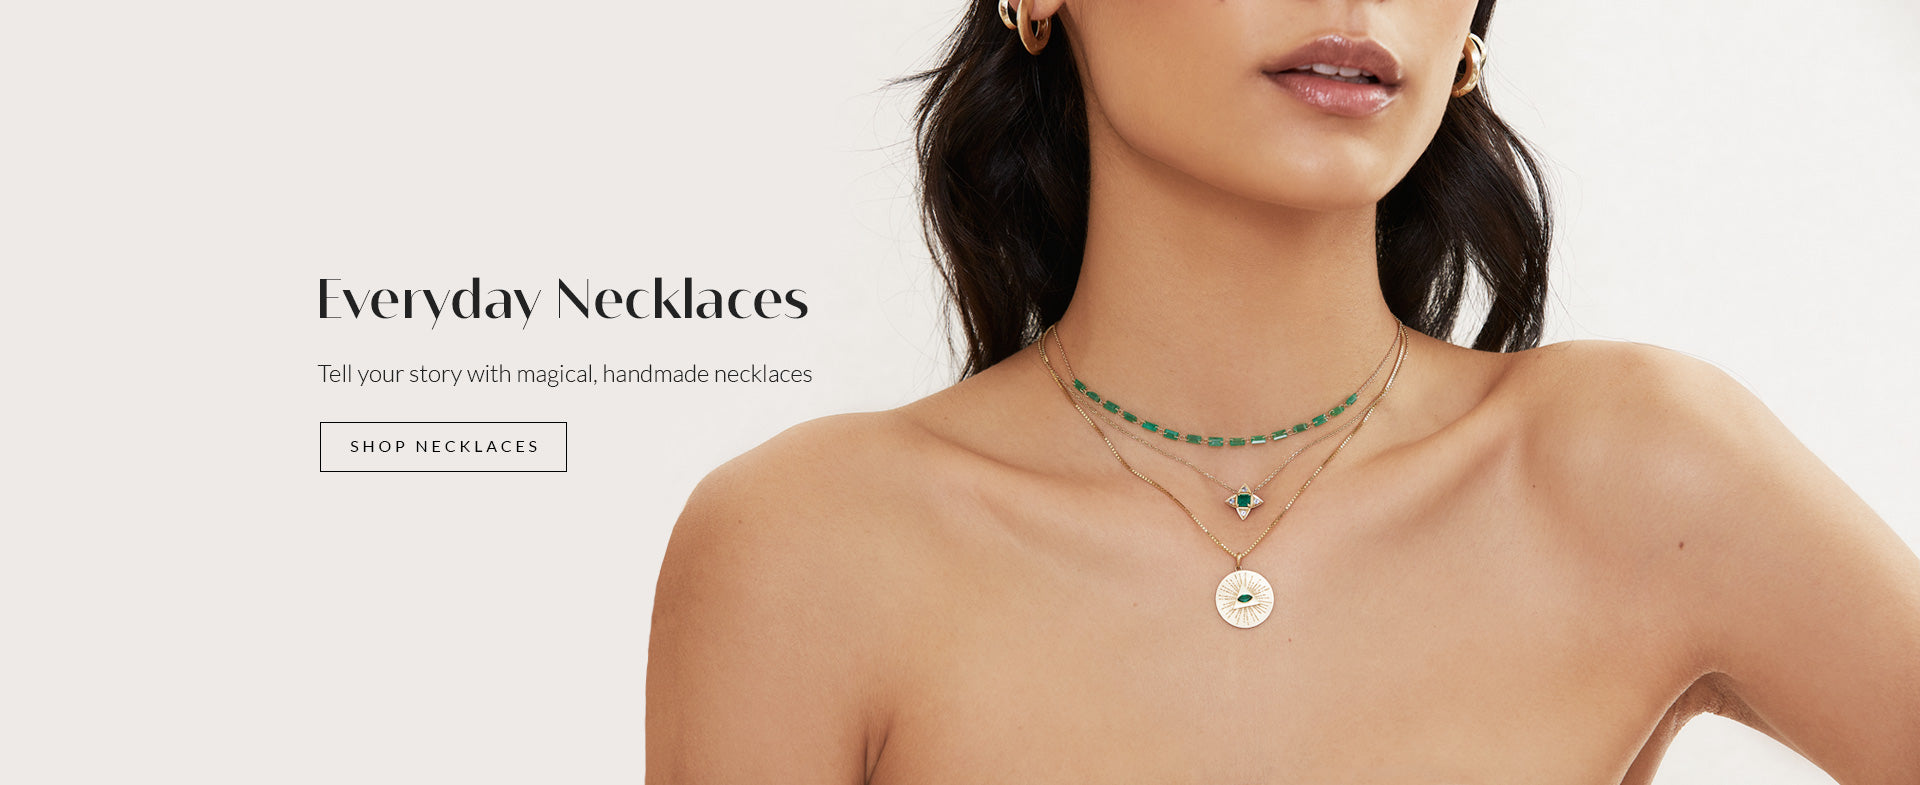 Carter Eve Jewelry, Shop Necklaces